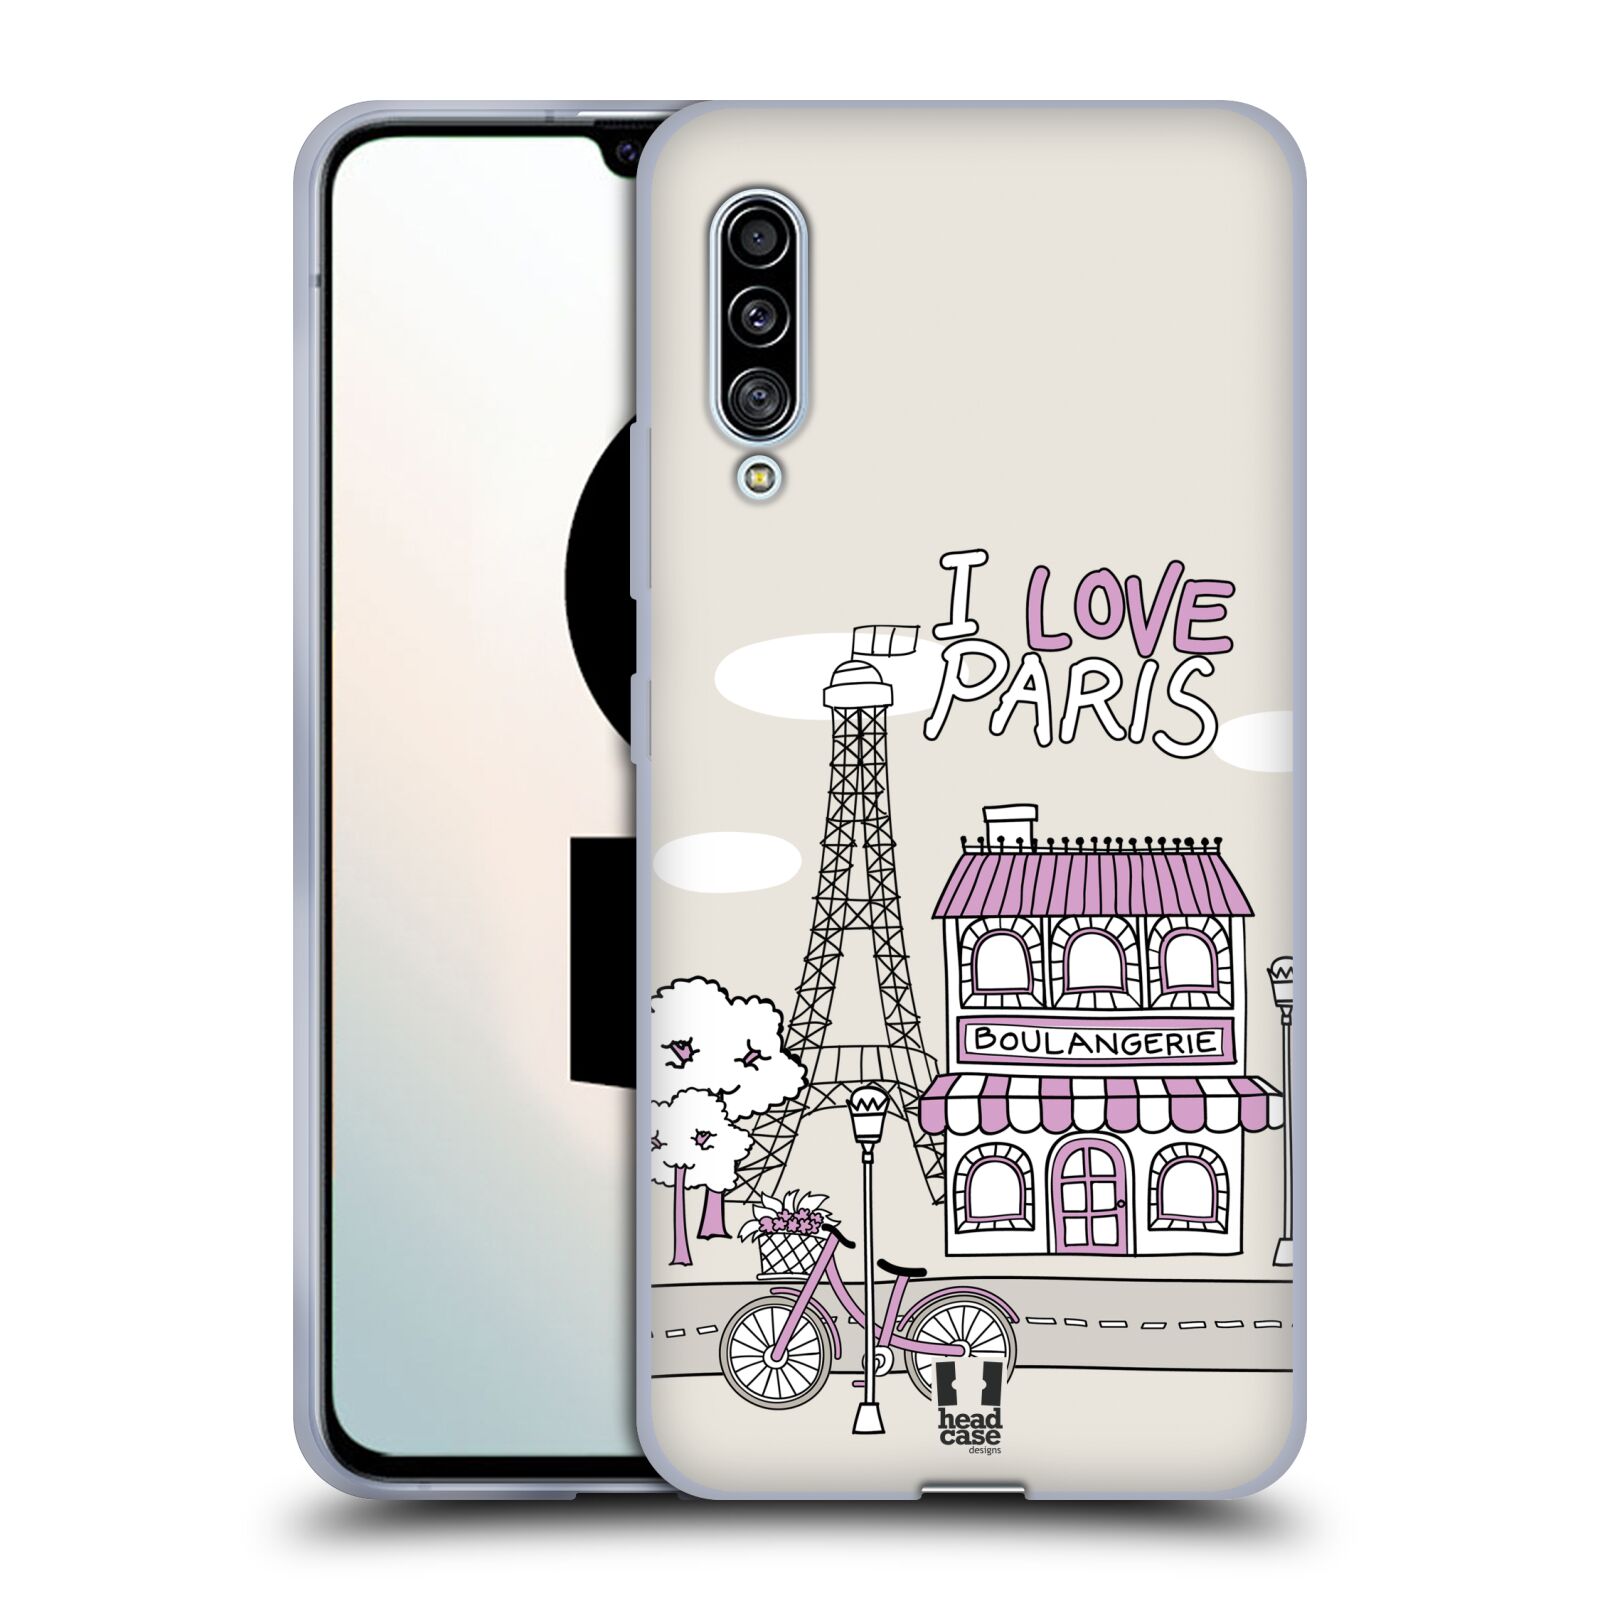 Plastový obal HEAD CASE na mobil Samsung Galaxy A90 5G vzor Kreslená městečka FIALOVÁ, Paříž, Francie, I LOVE PARIS